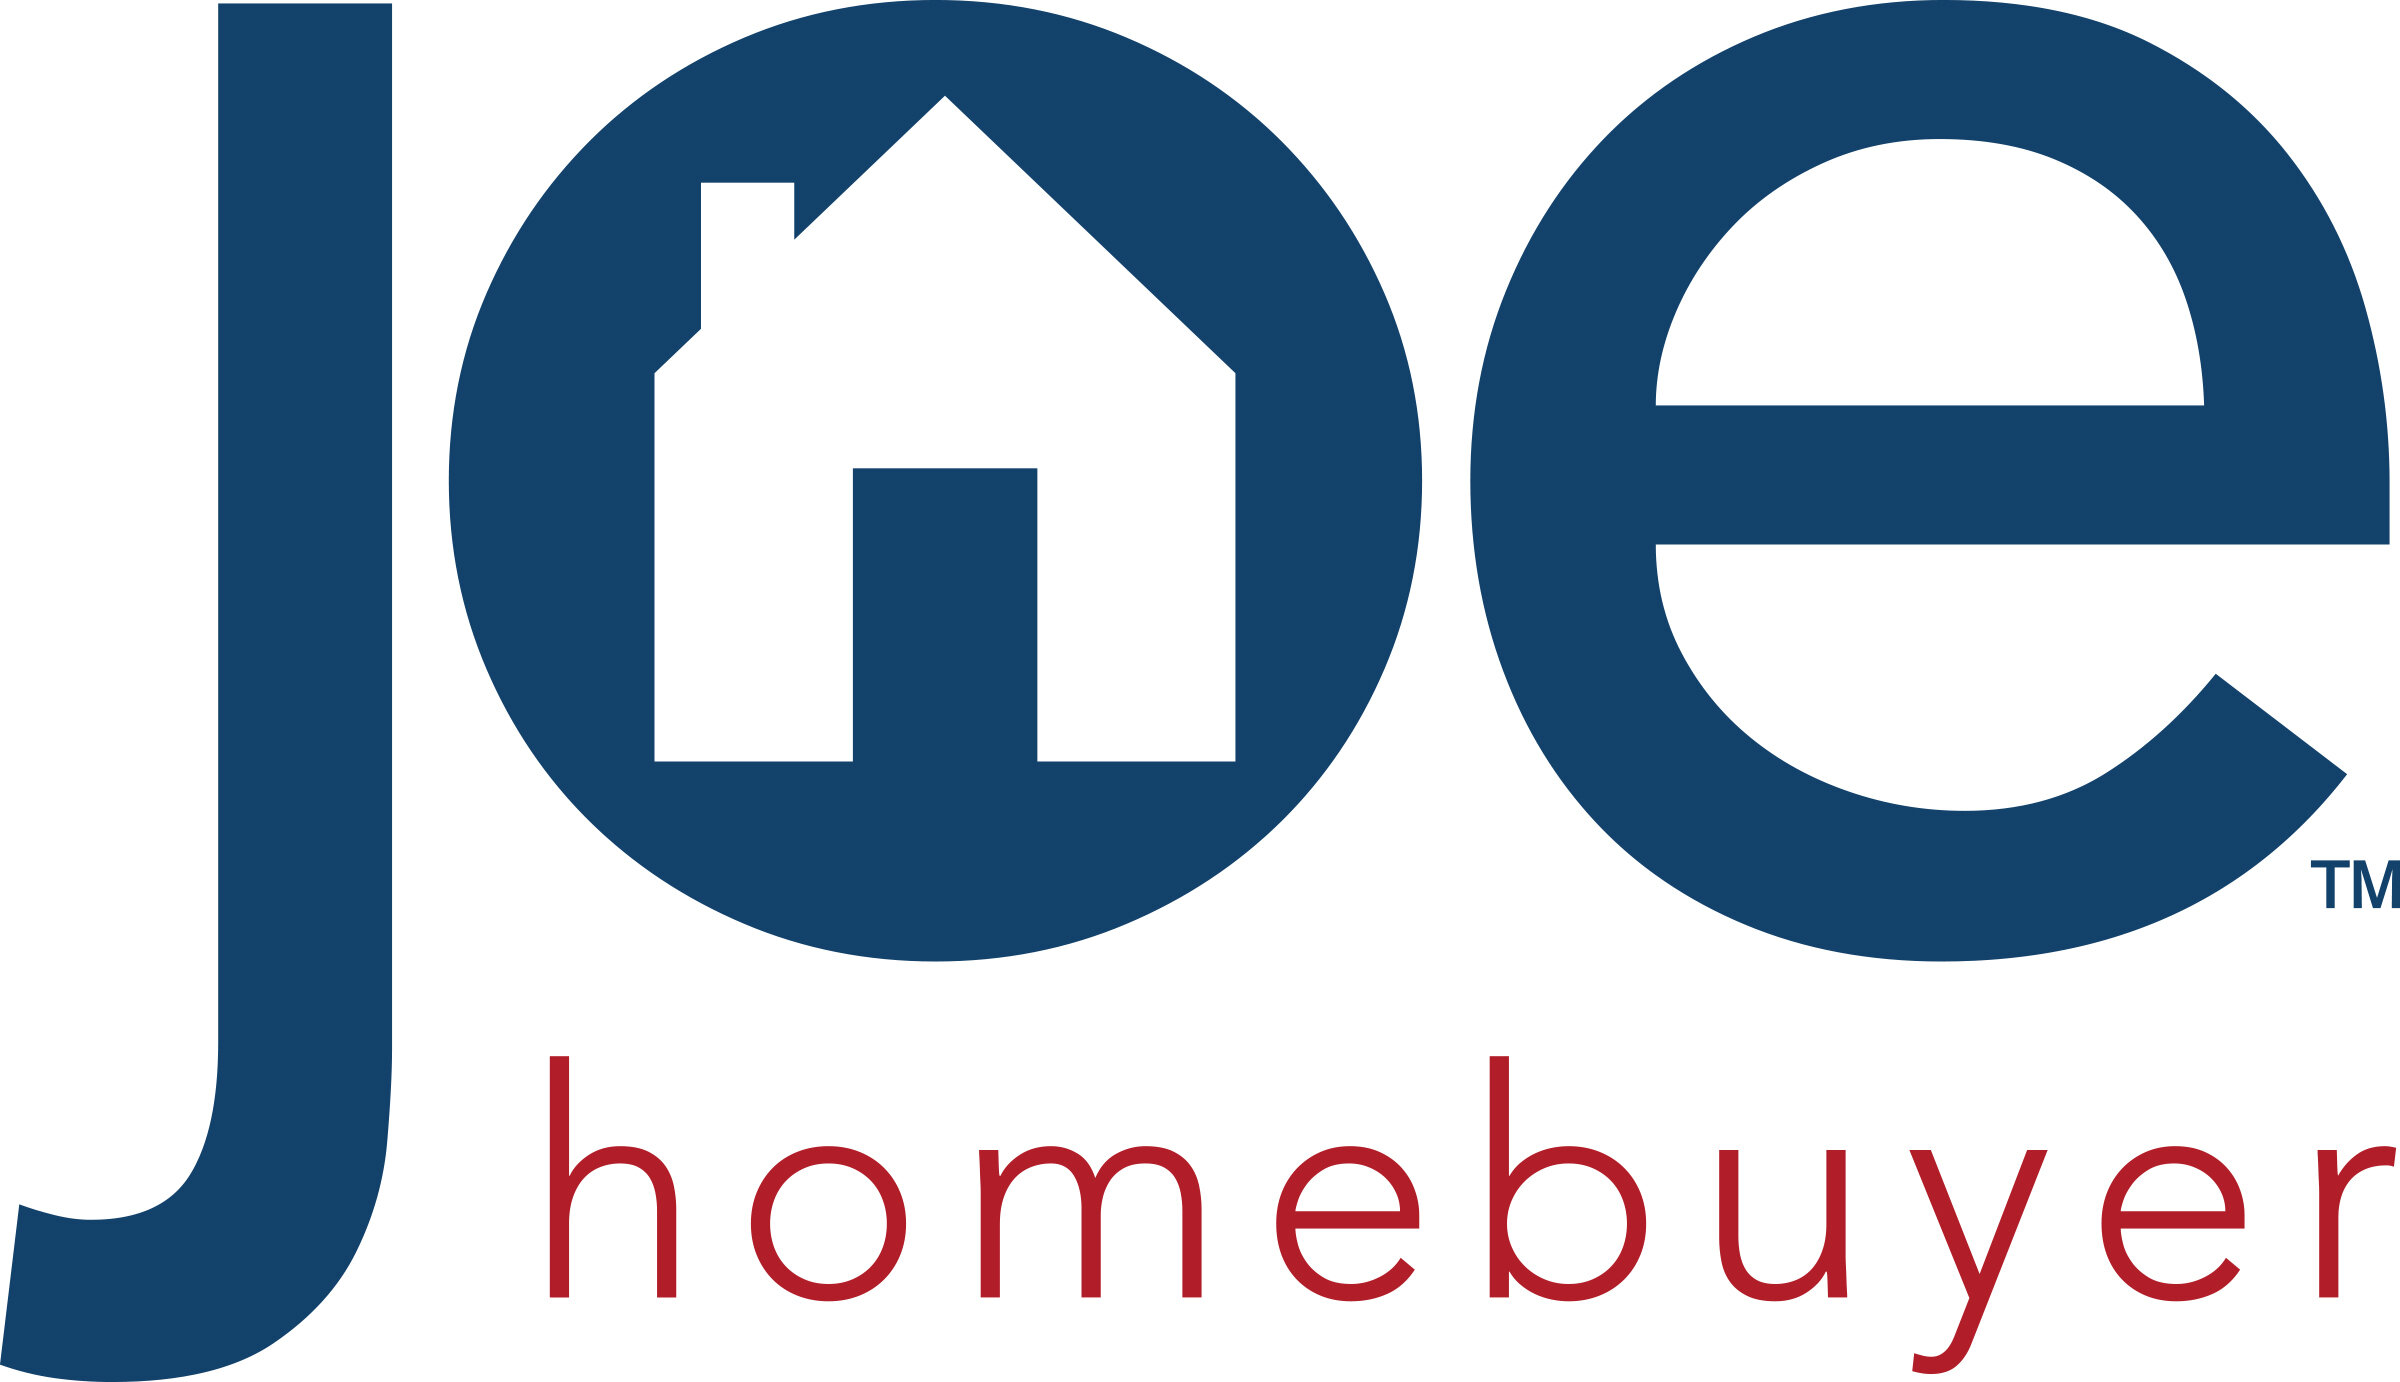 Joe Homebuyer Central Florida logo